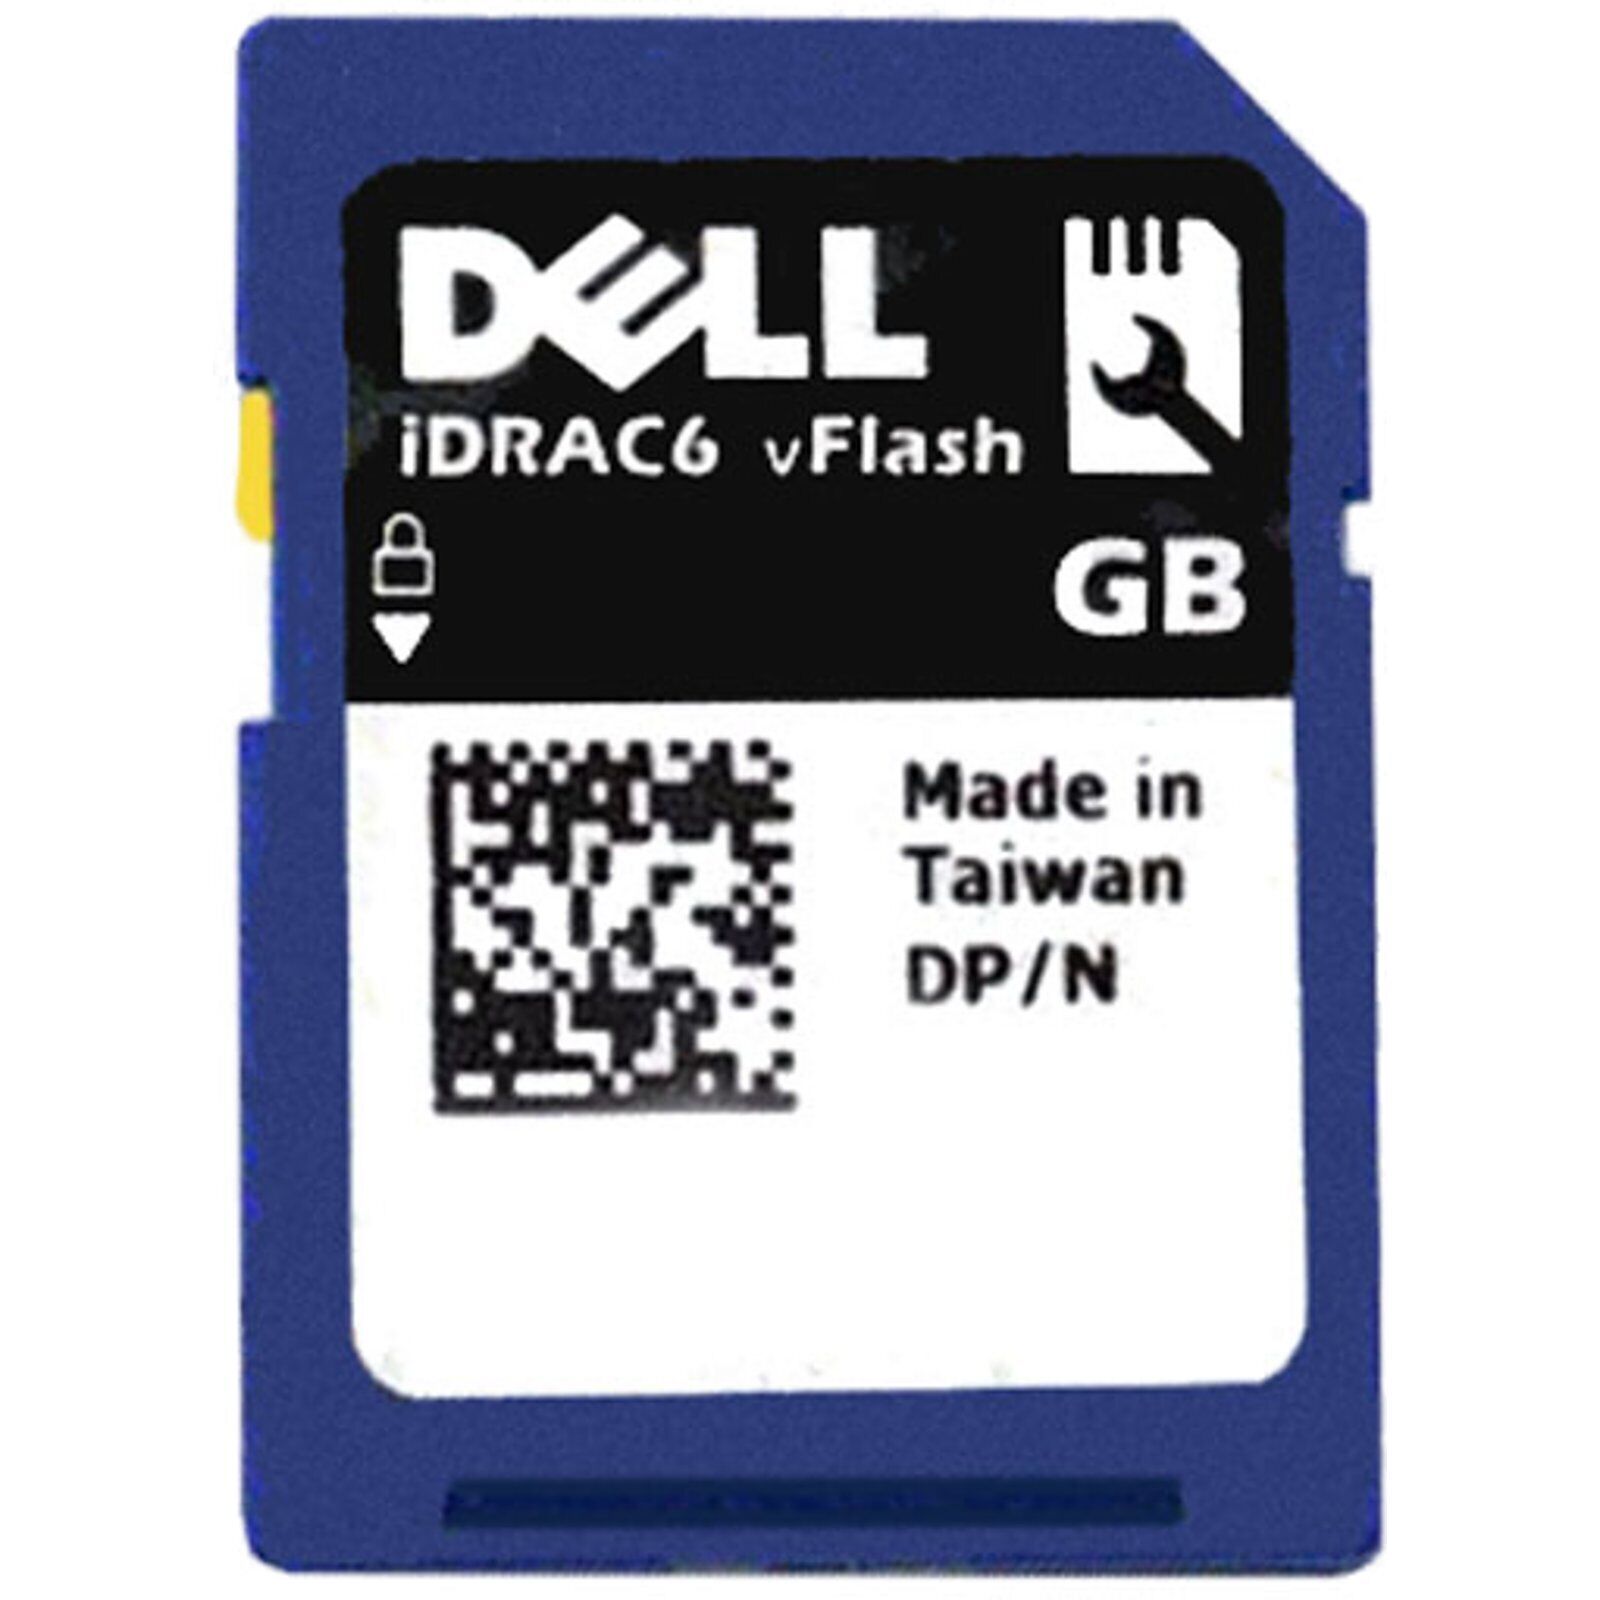 Dell 1GB iDRAC vFlash SD Crd (RX790)